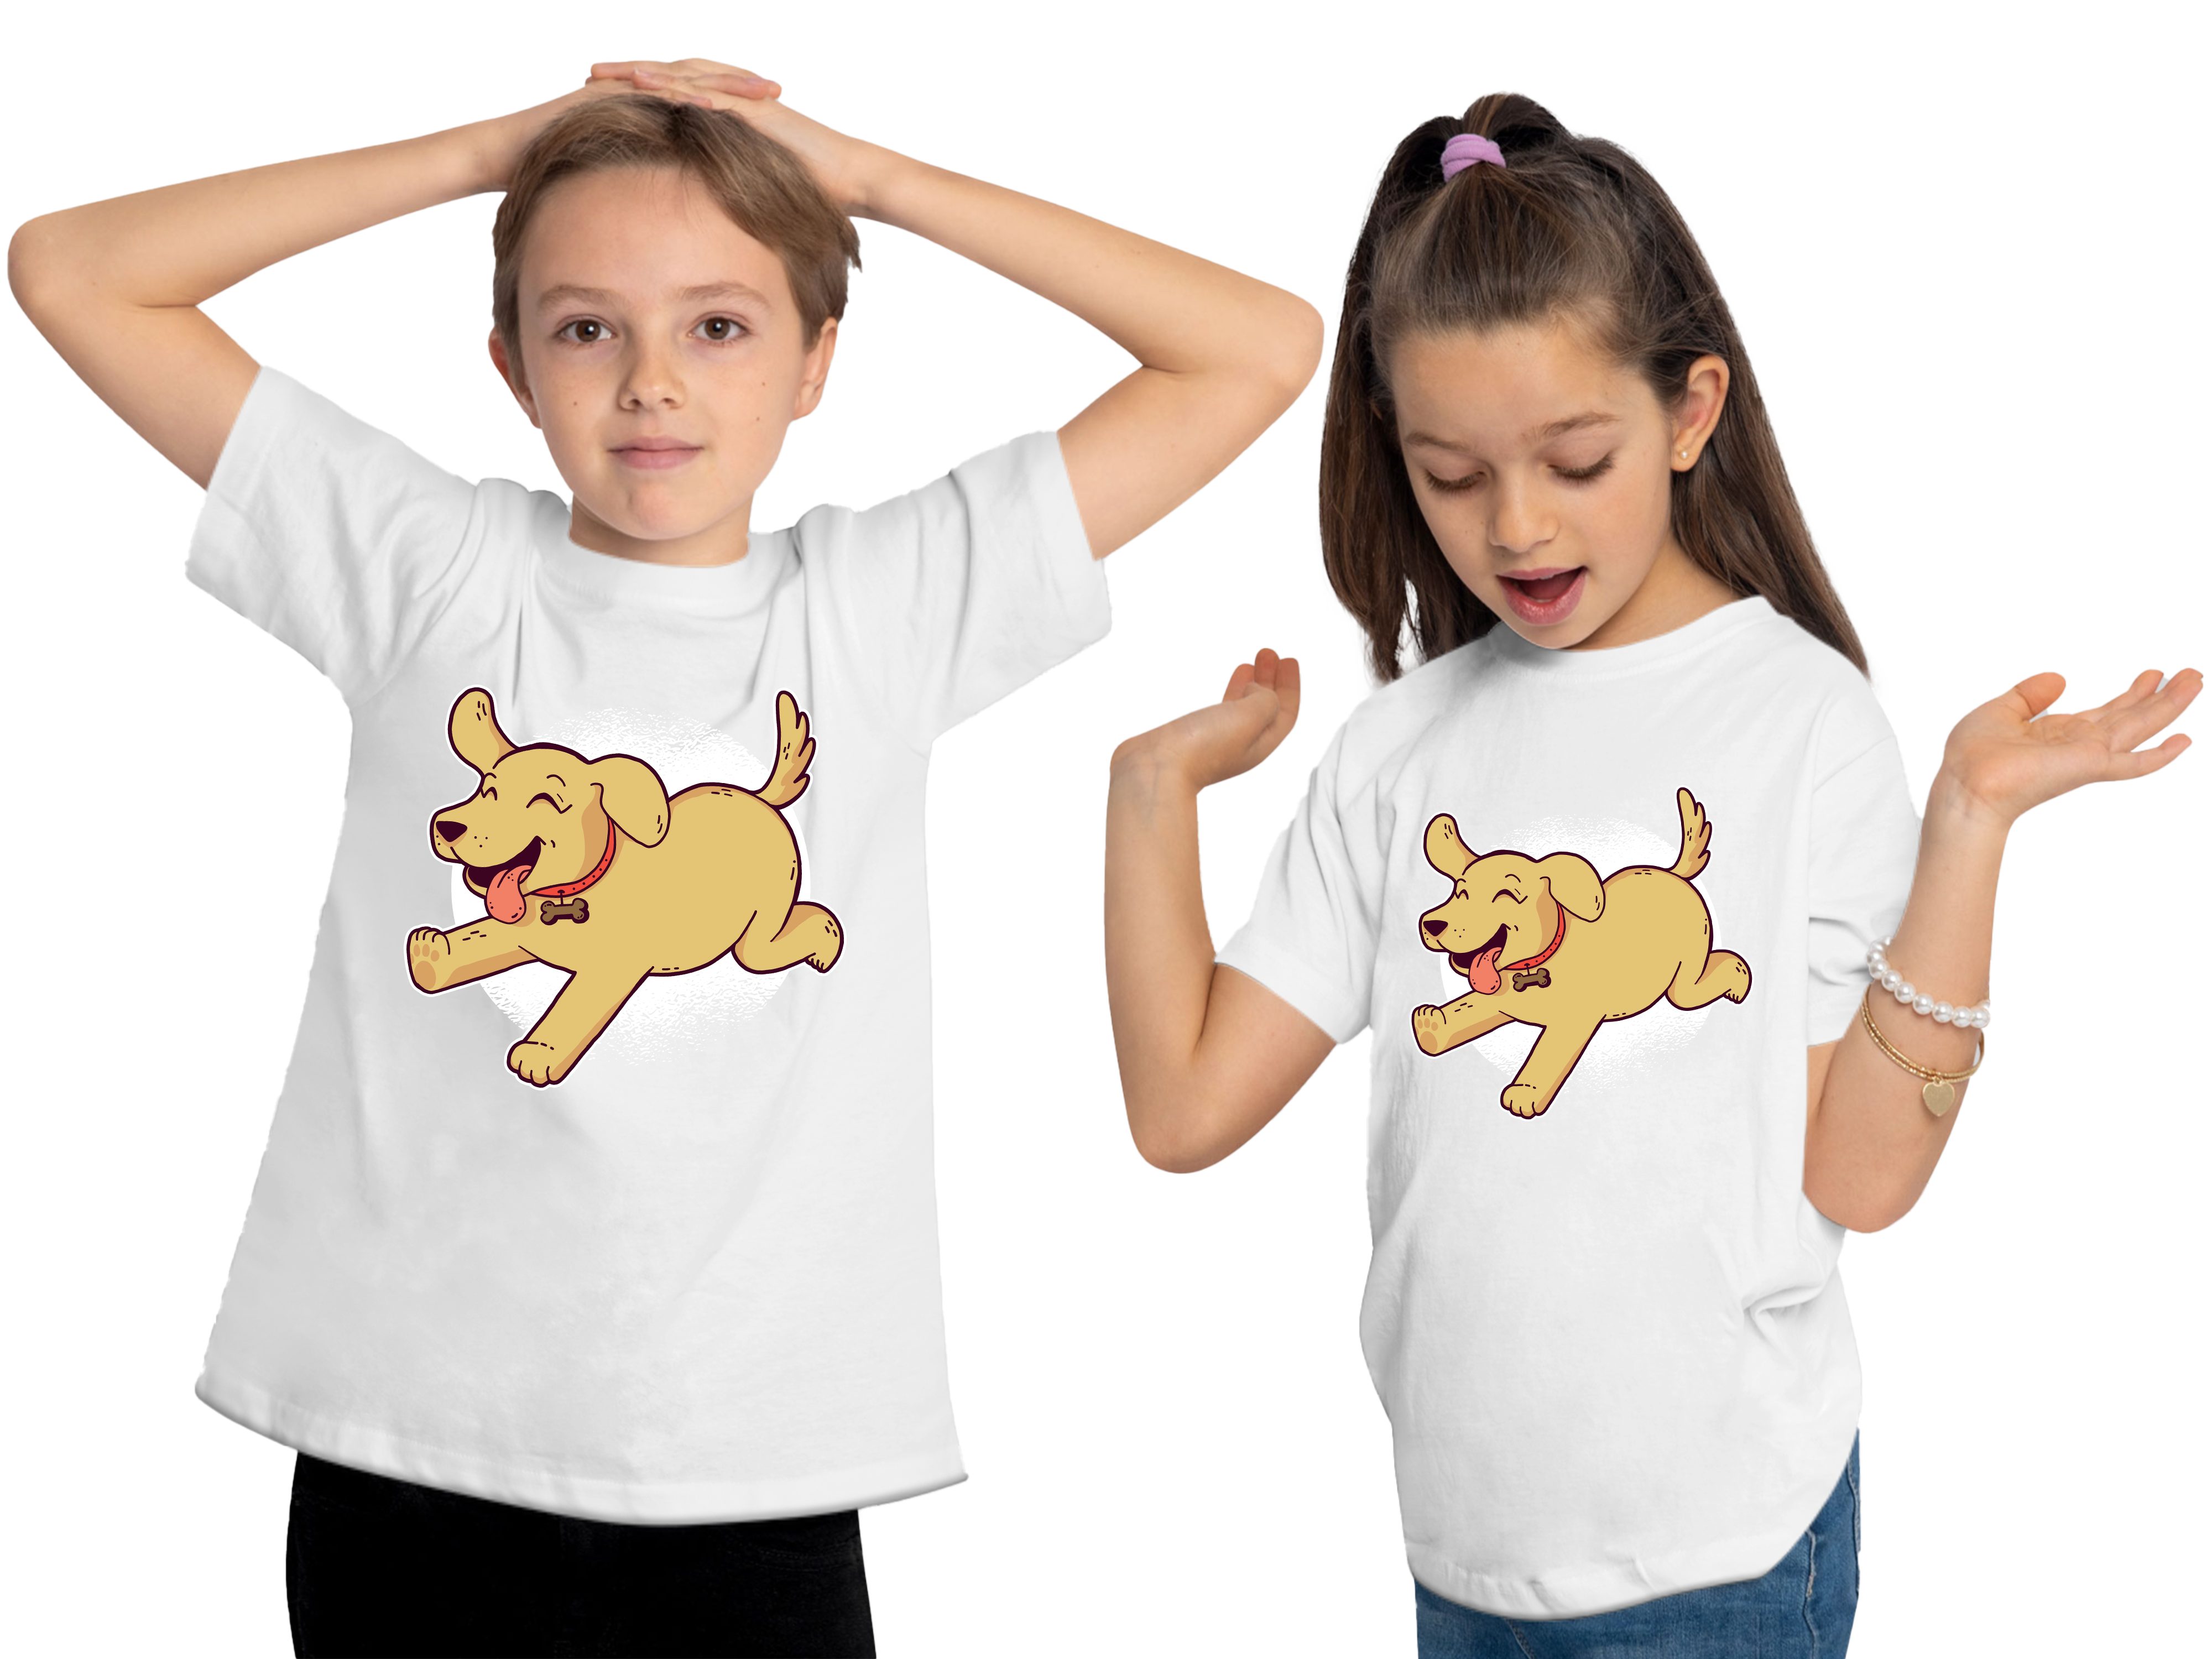 Spielender Hunde Welpe Print i248 MyDesign24 Shirt Kinder mit Aufdruck, weiss Baumwollshirt T-Shirt bedruckt - Labrador